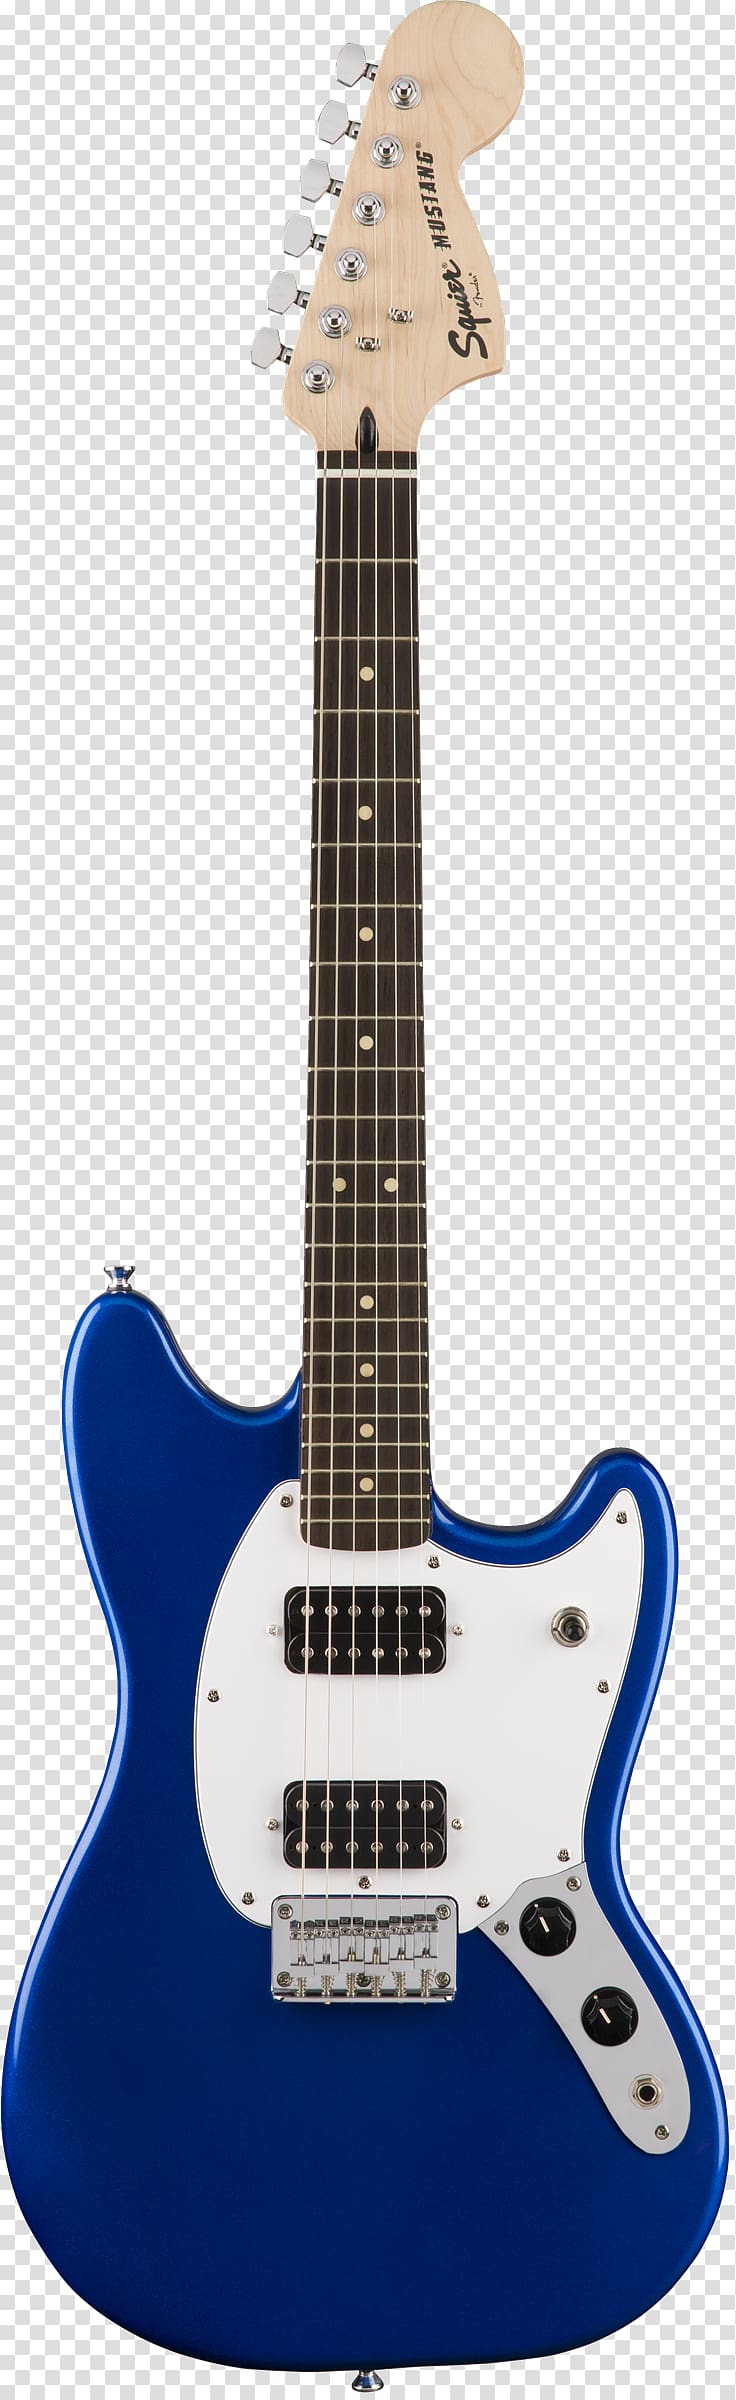 Fender Bullet Fender Mustang Fender Stratocaster Squier Guitar, electric guitar transparent background PNG clipart